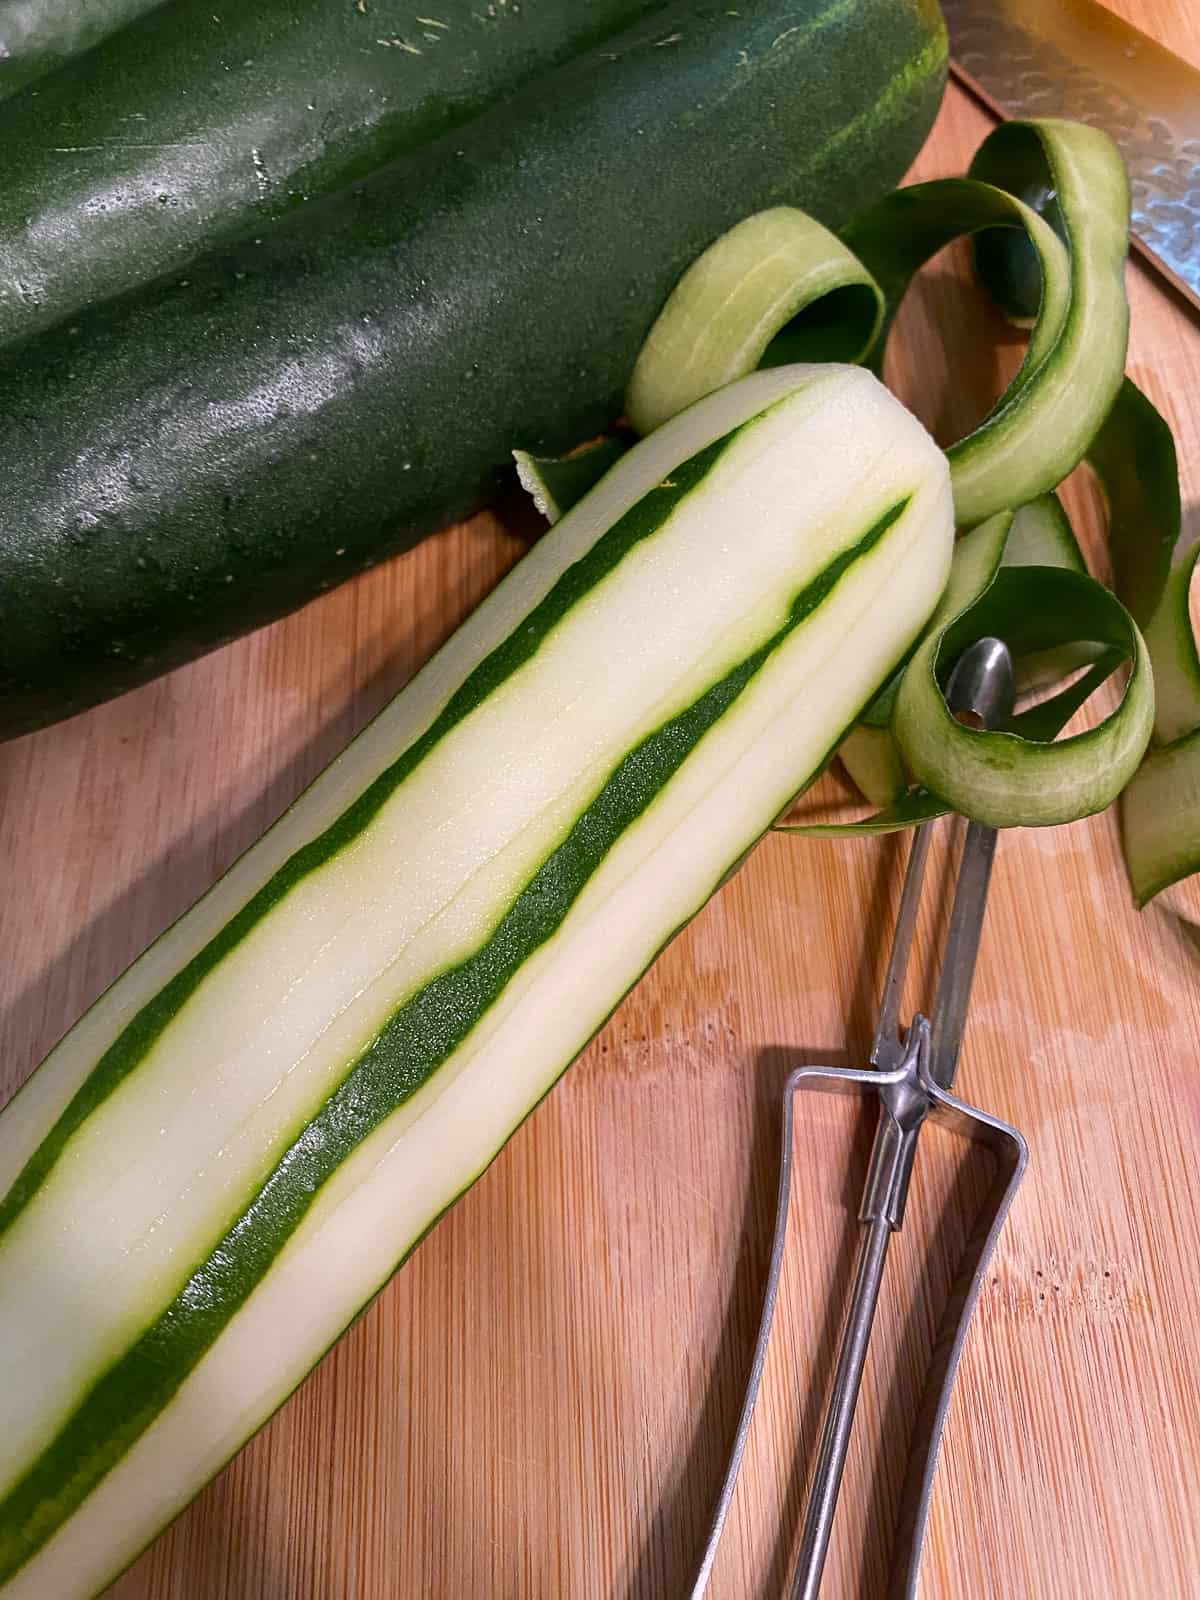 process shot demonstrating peeling of cucumber